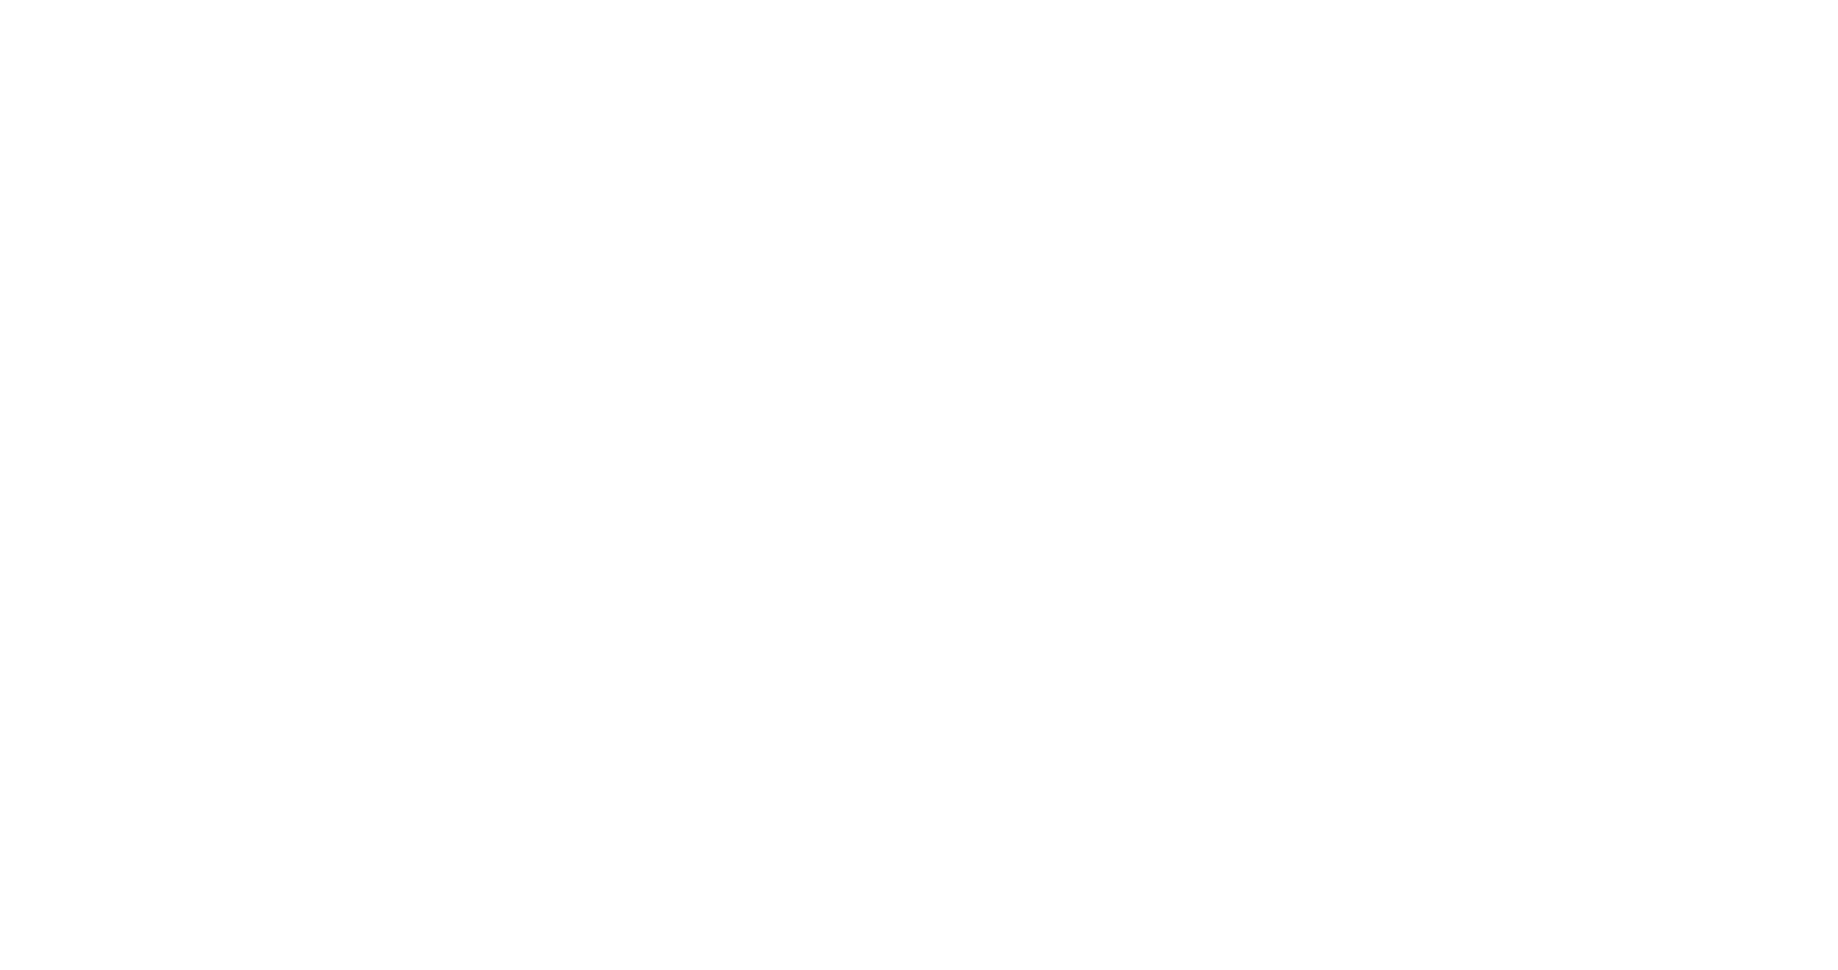 Hallmark-Logo